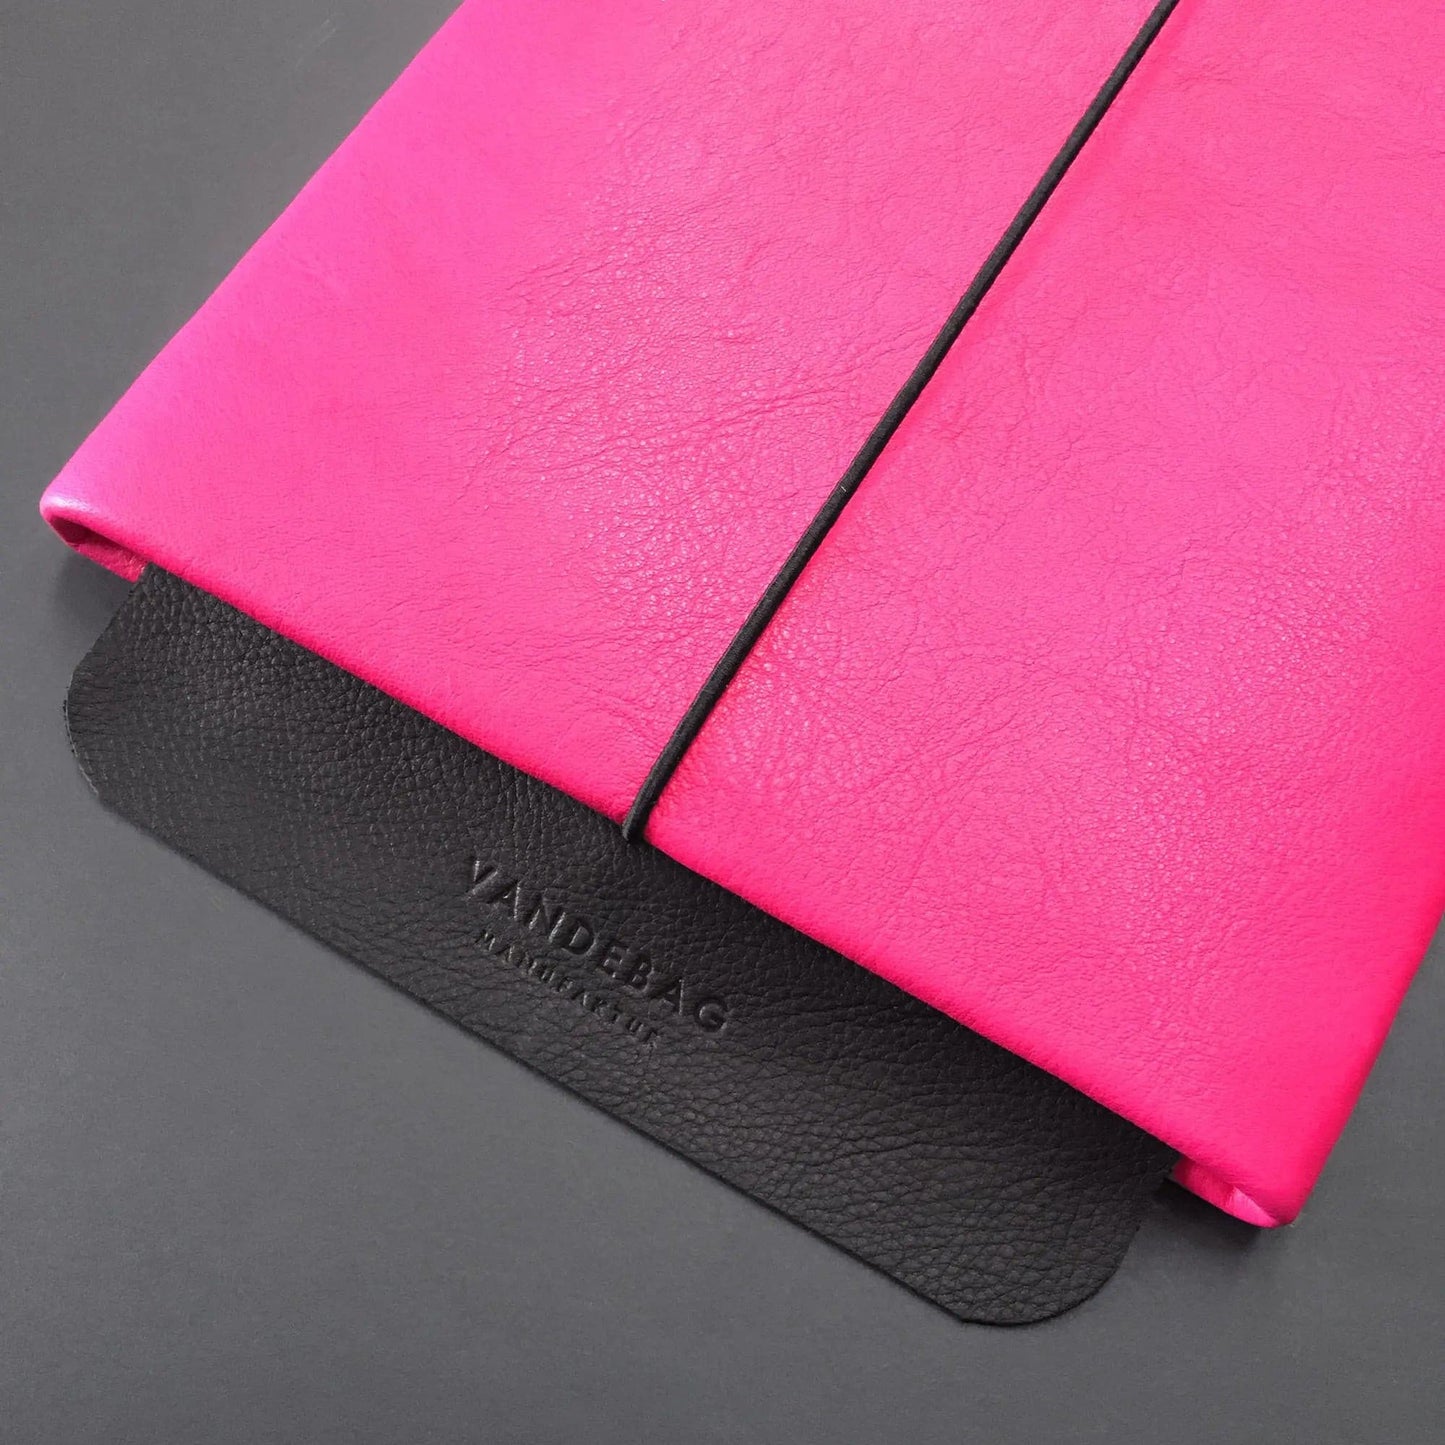 neonpinke Leder-Notebookhülle mit schwarzer Verschlussklappe aus geprägtem Leder